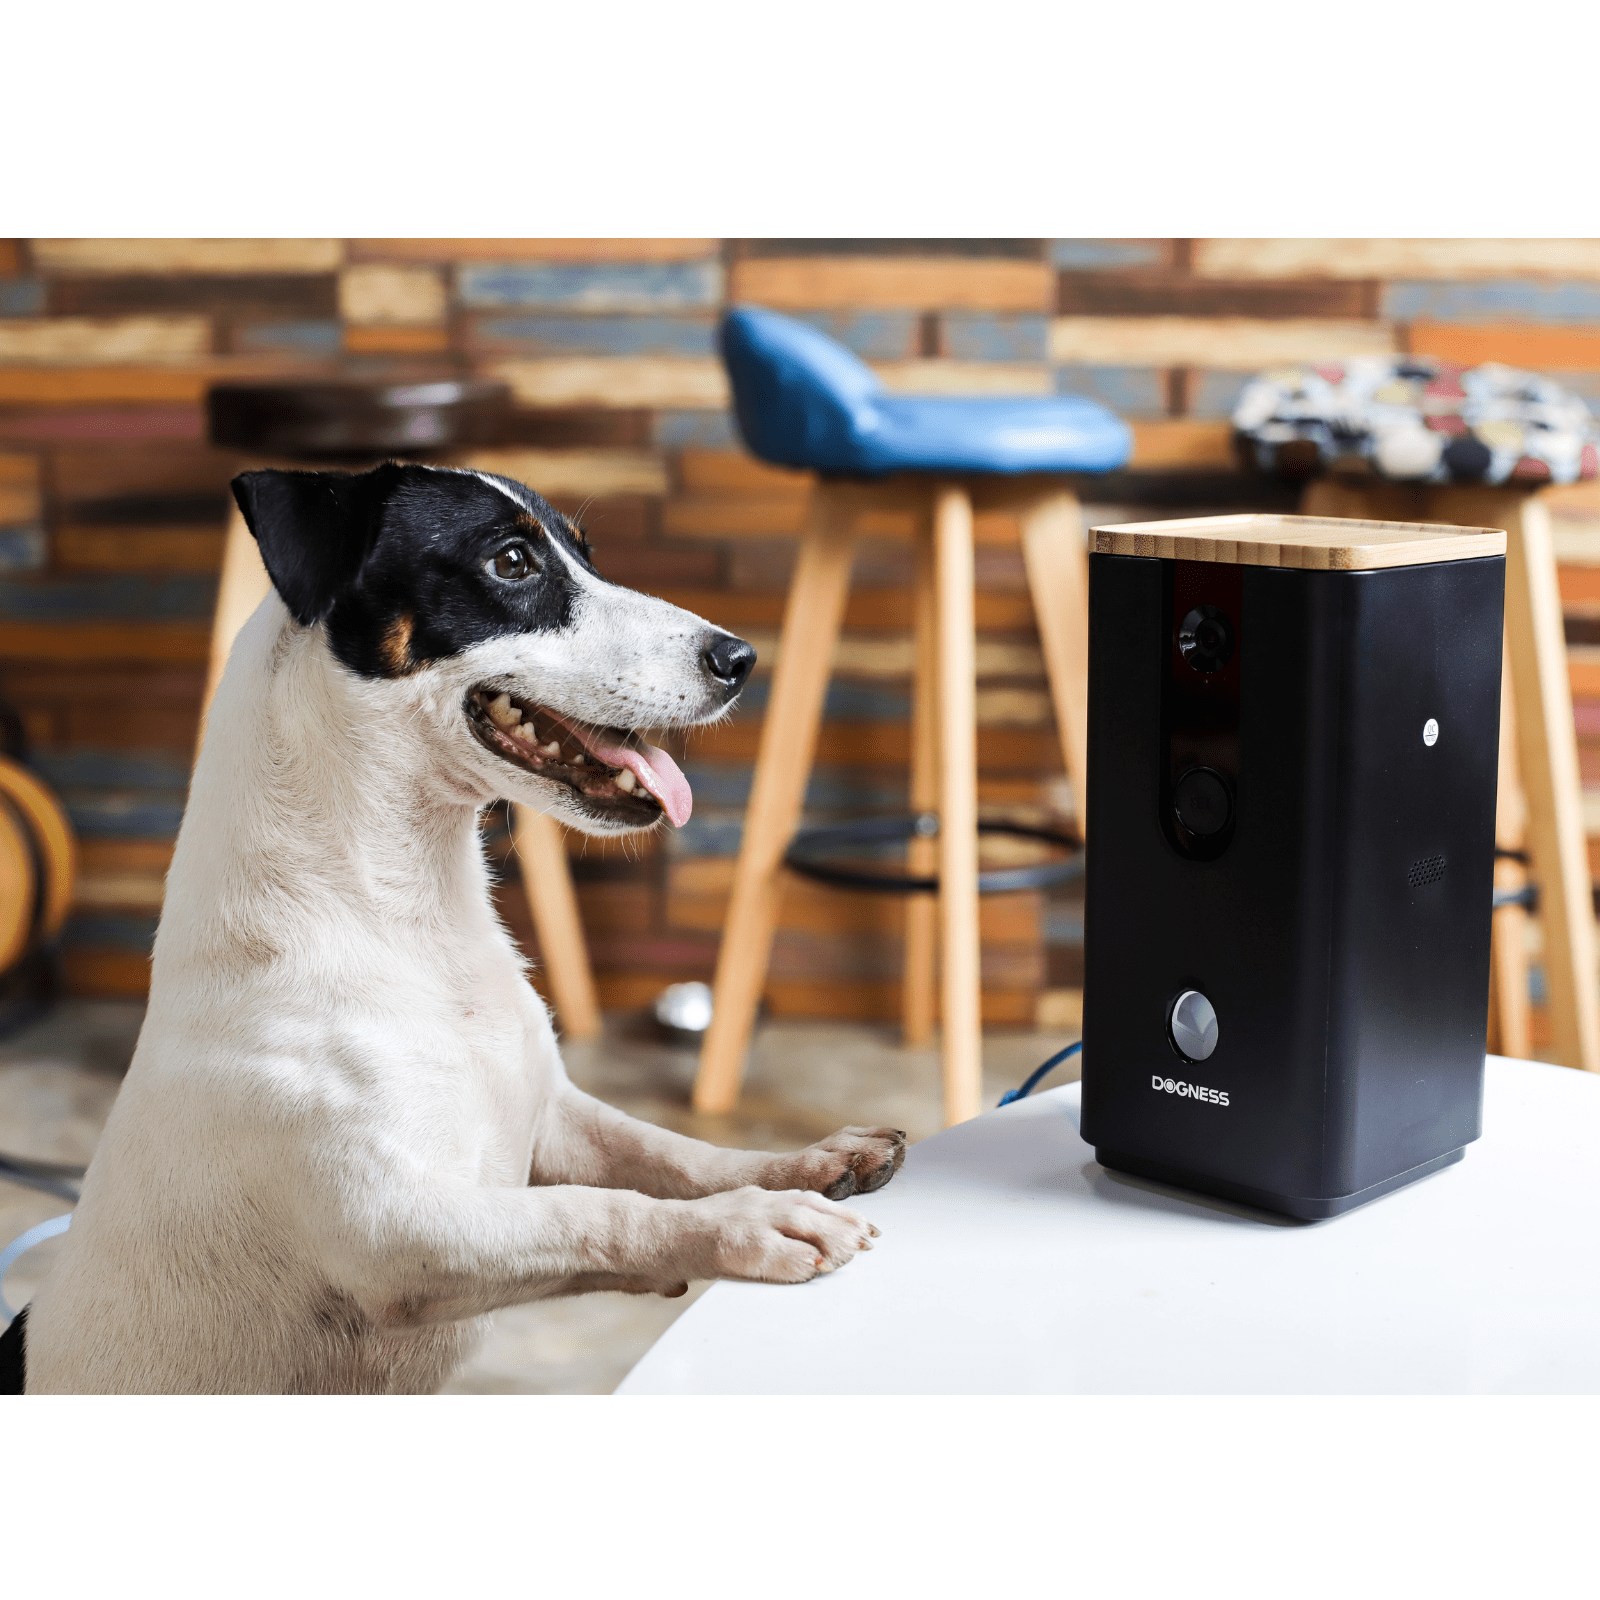 DOGNESS Pet Treat Dispenser with Camera